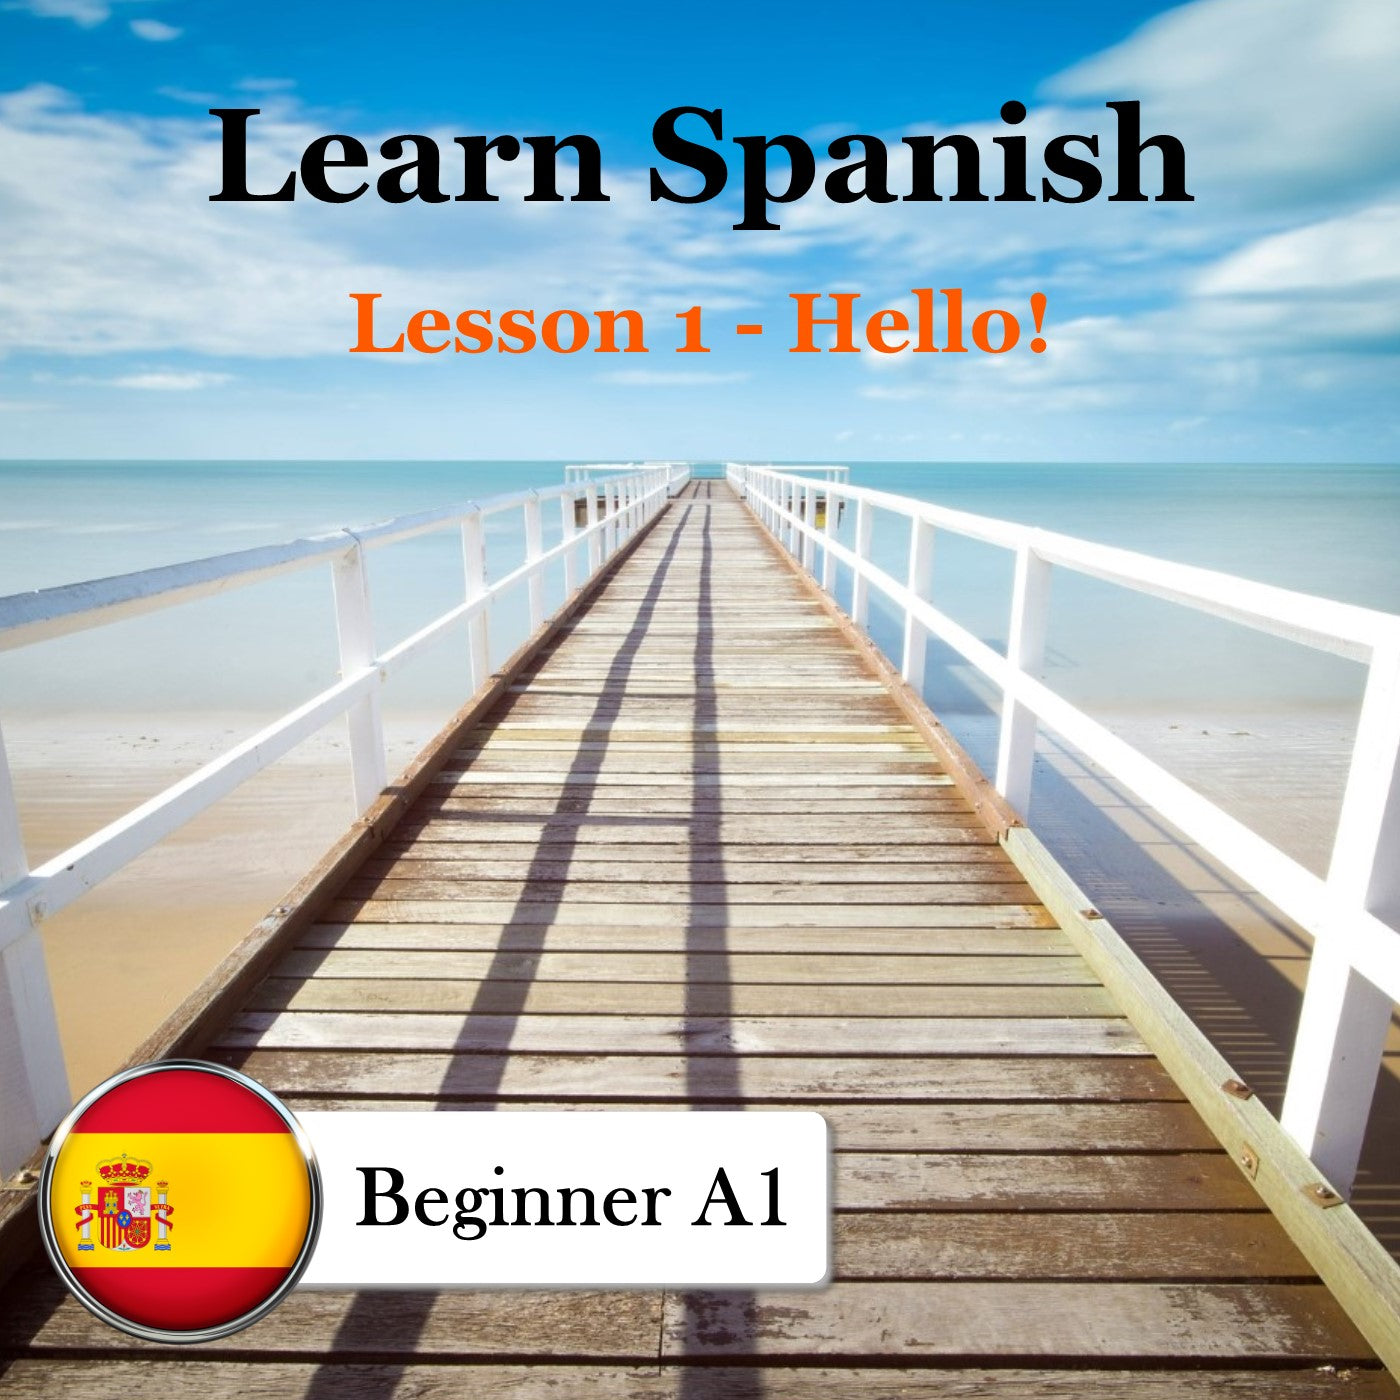 Learn Spanish: A1 Beginner - Lesson 1 - Hello!